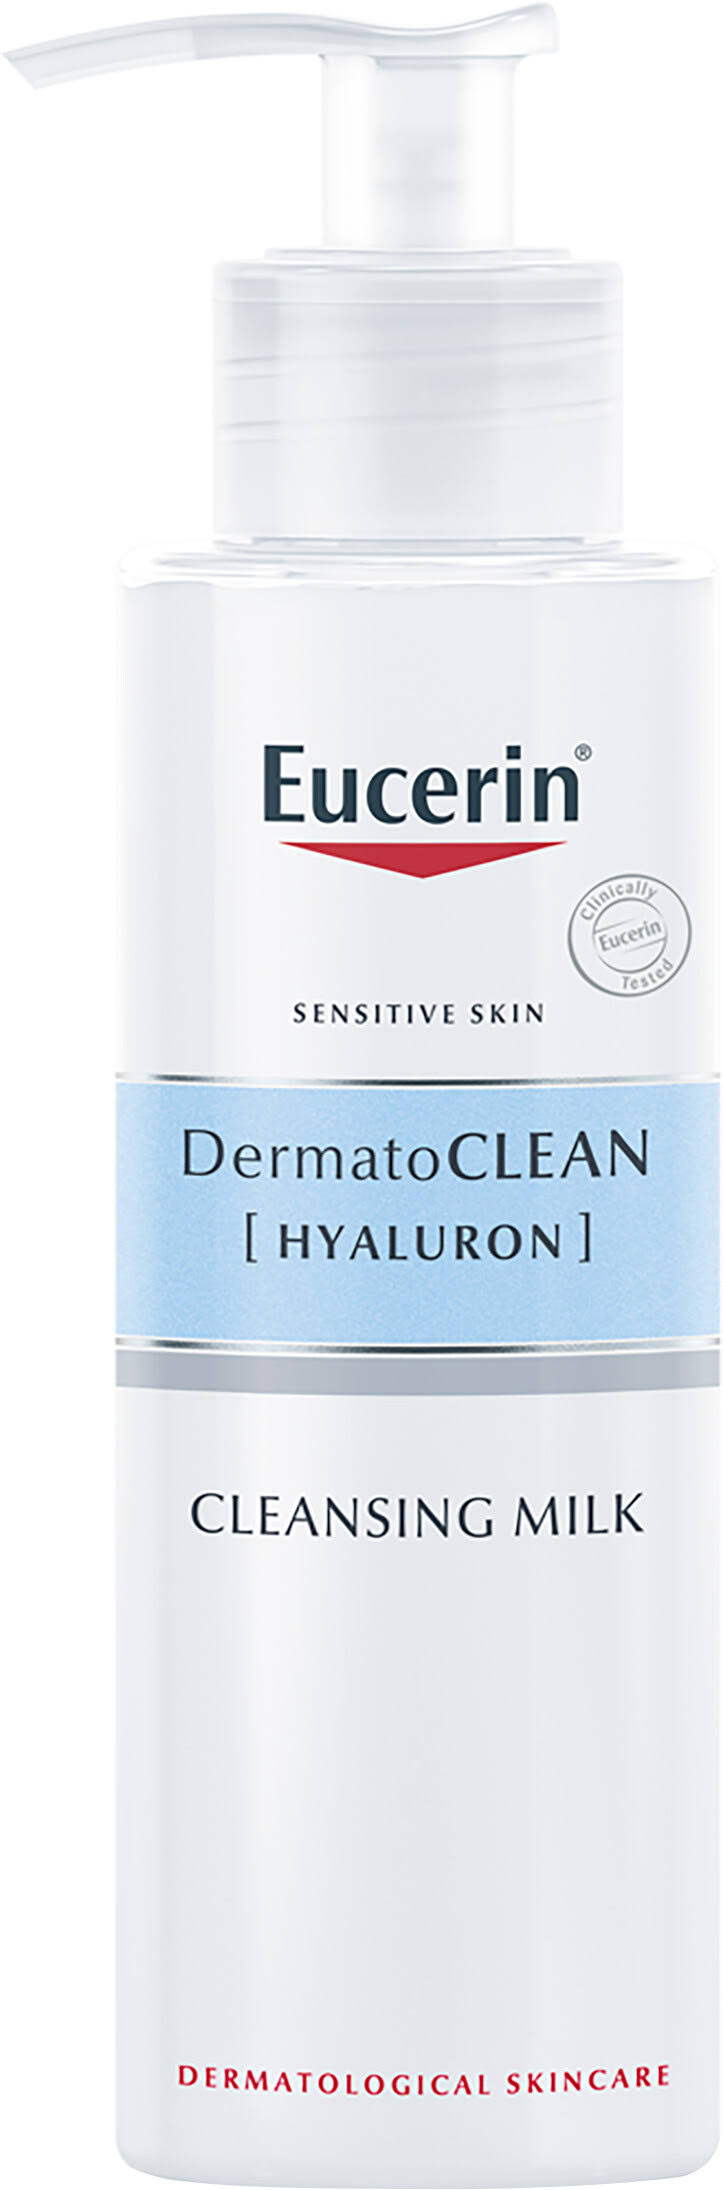 Eucerin DermatoCLEAN Hyaluron Cleansing Milk 200ml